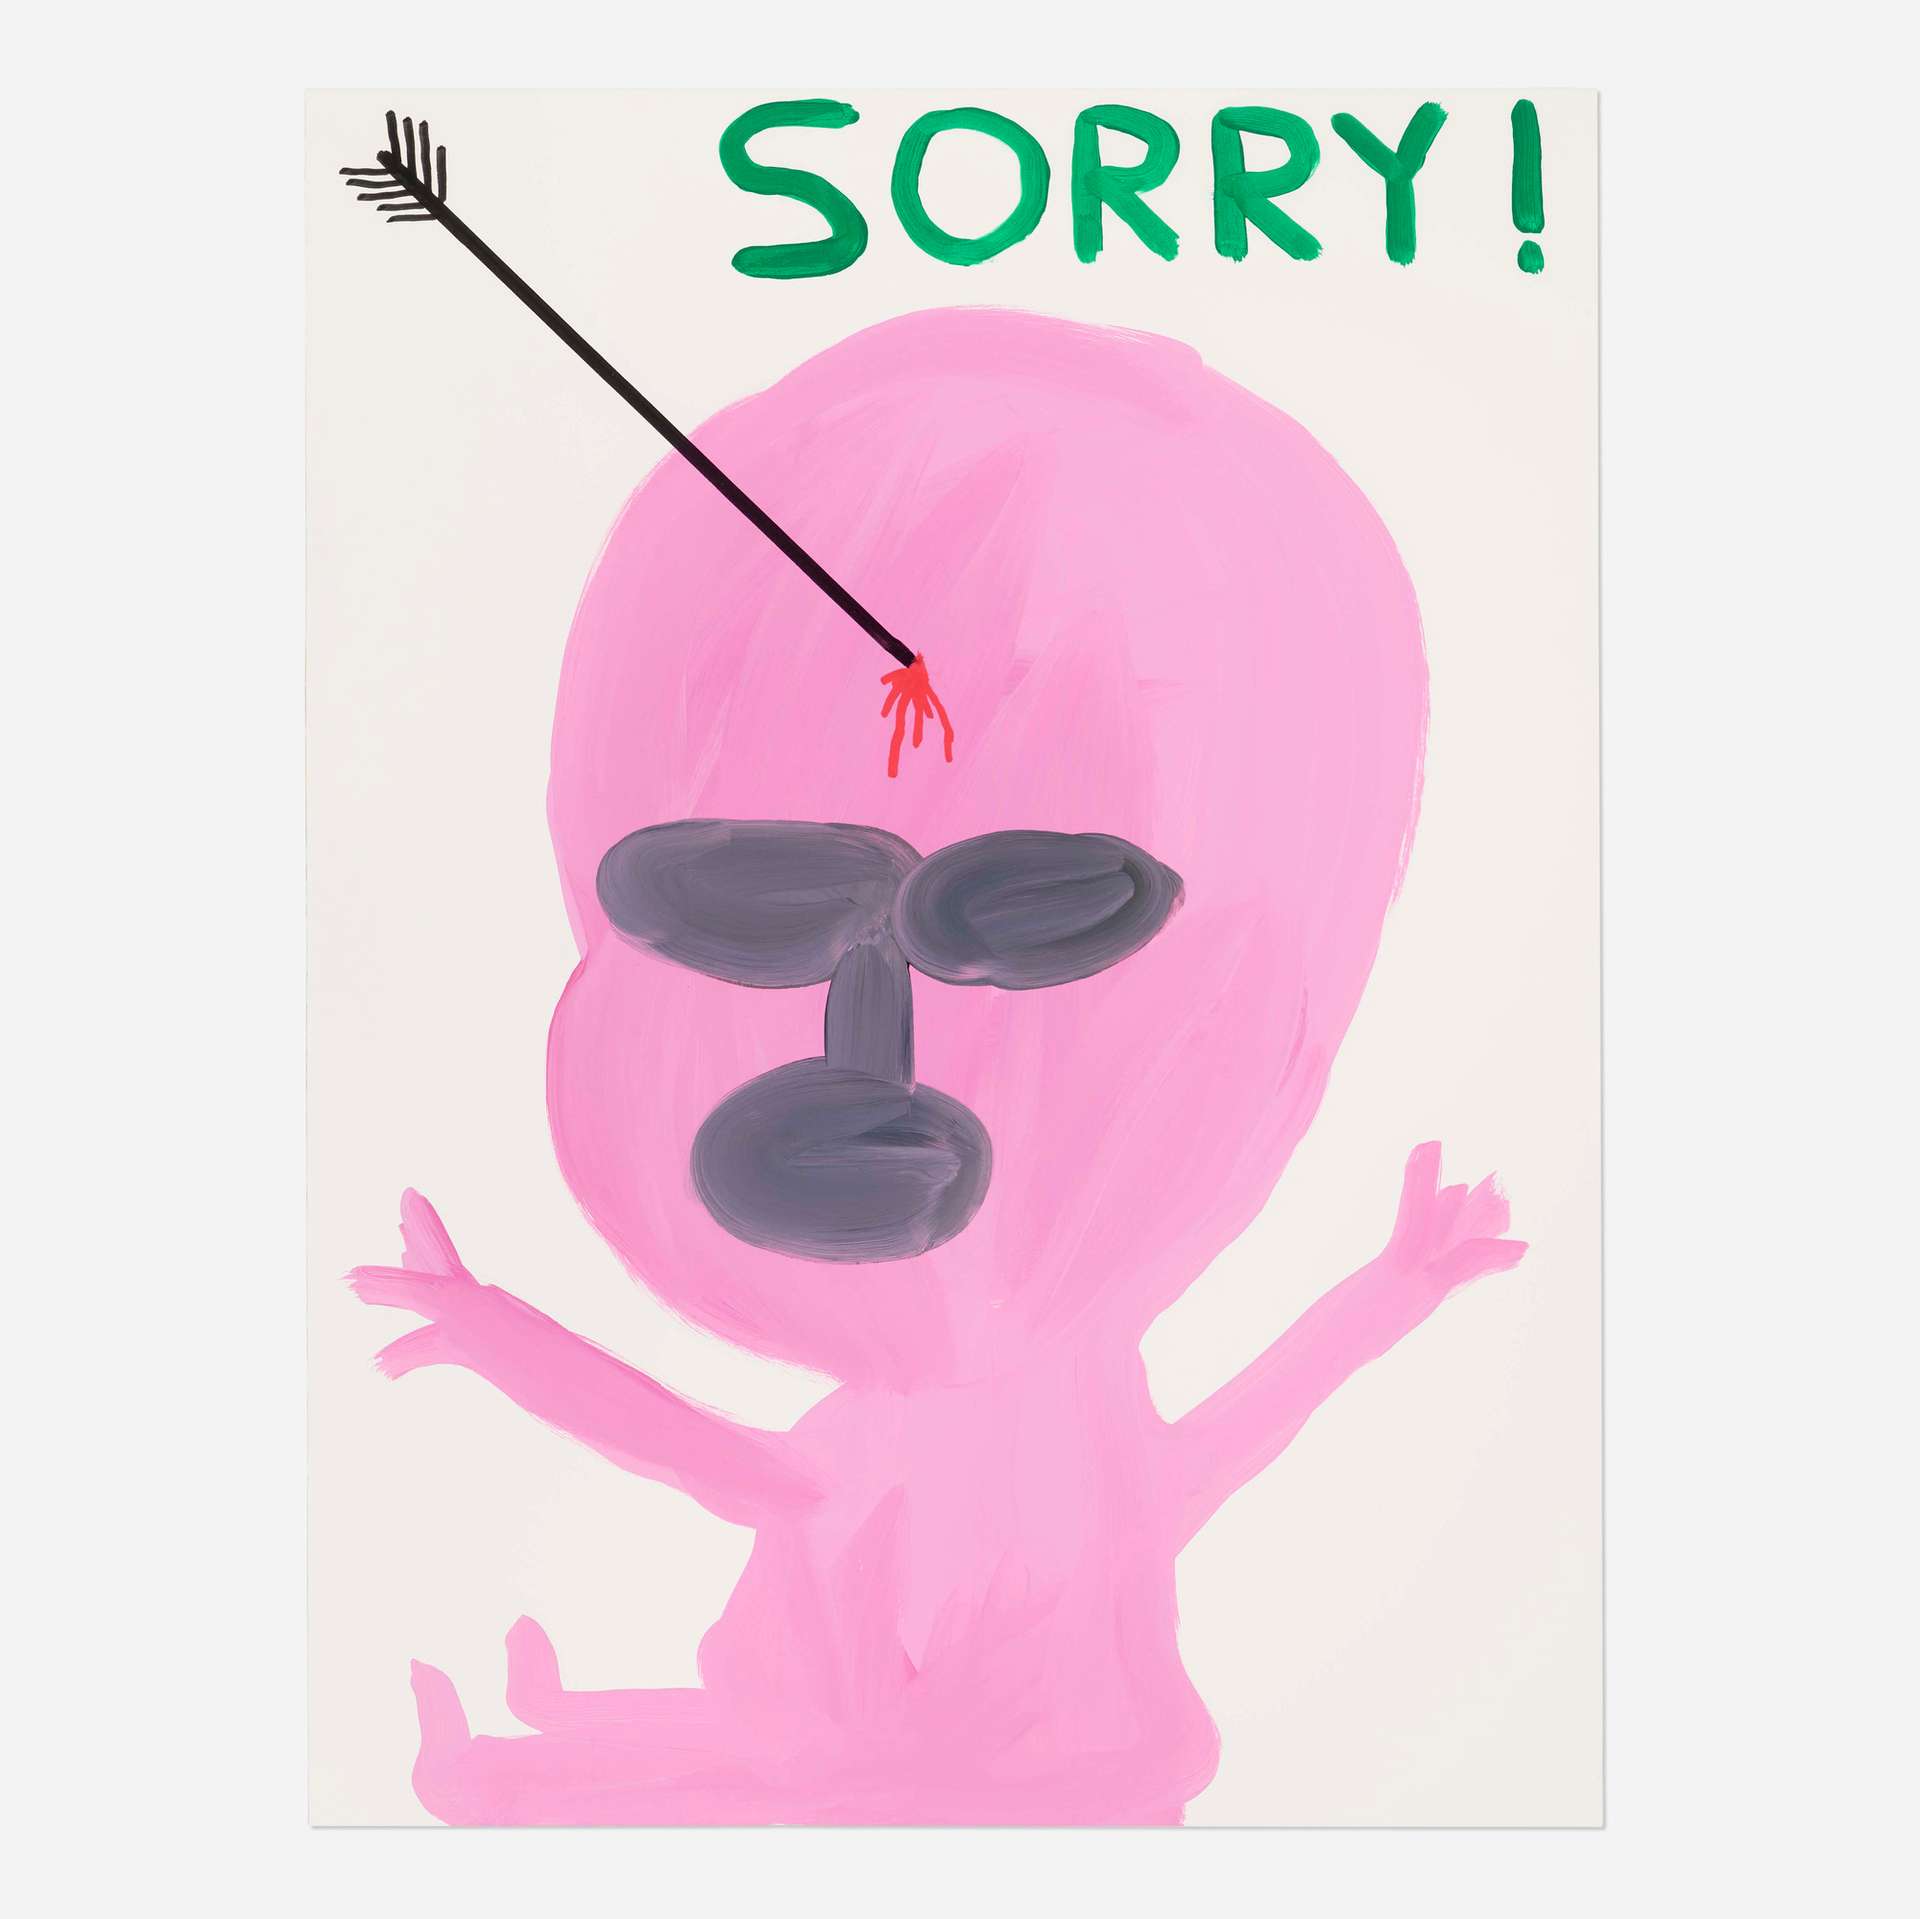 Sorry! by David Shrigley